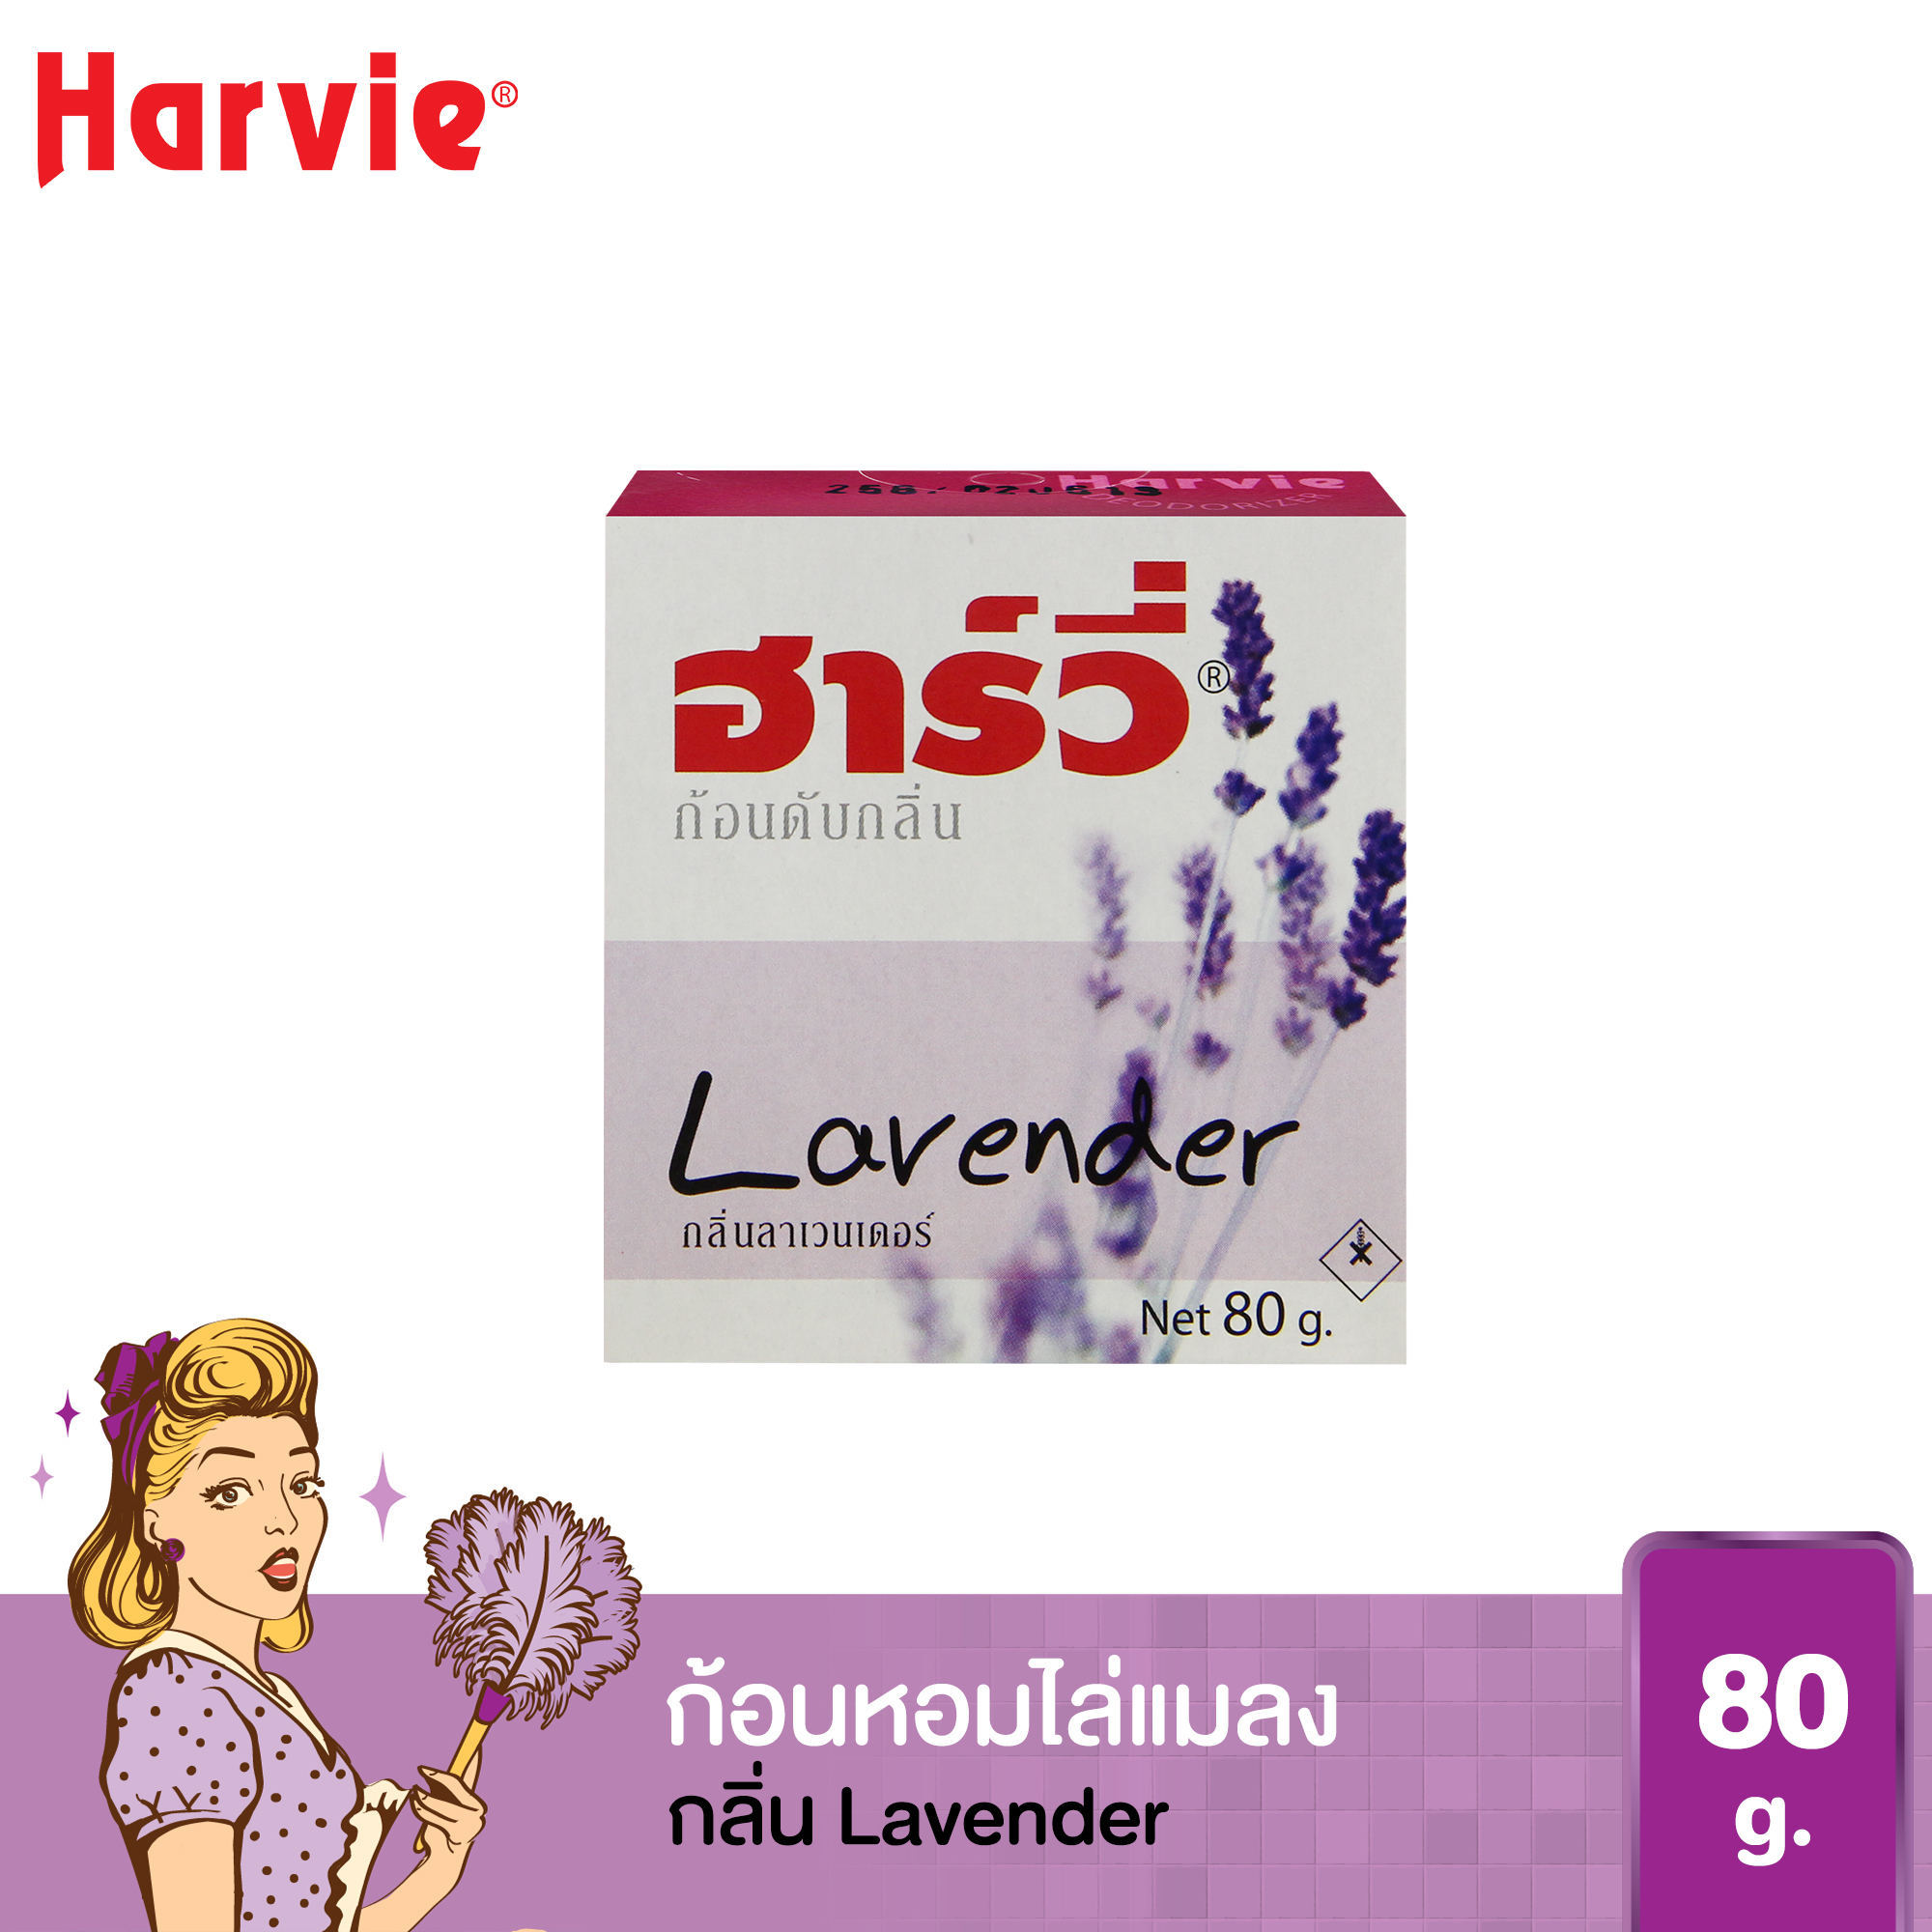 Harvie Deodorizer ก้อนหอมดับกลิ่นและไล่แมลง ฮาร์วี่ 80g. กลิ่น Lavender (กล่อง)